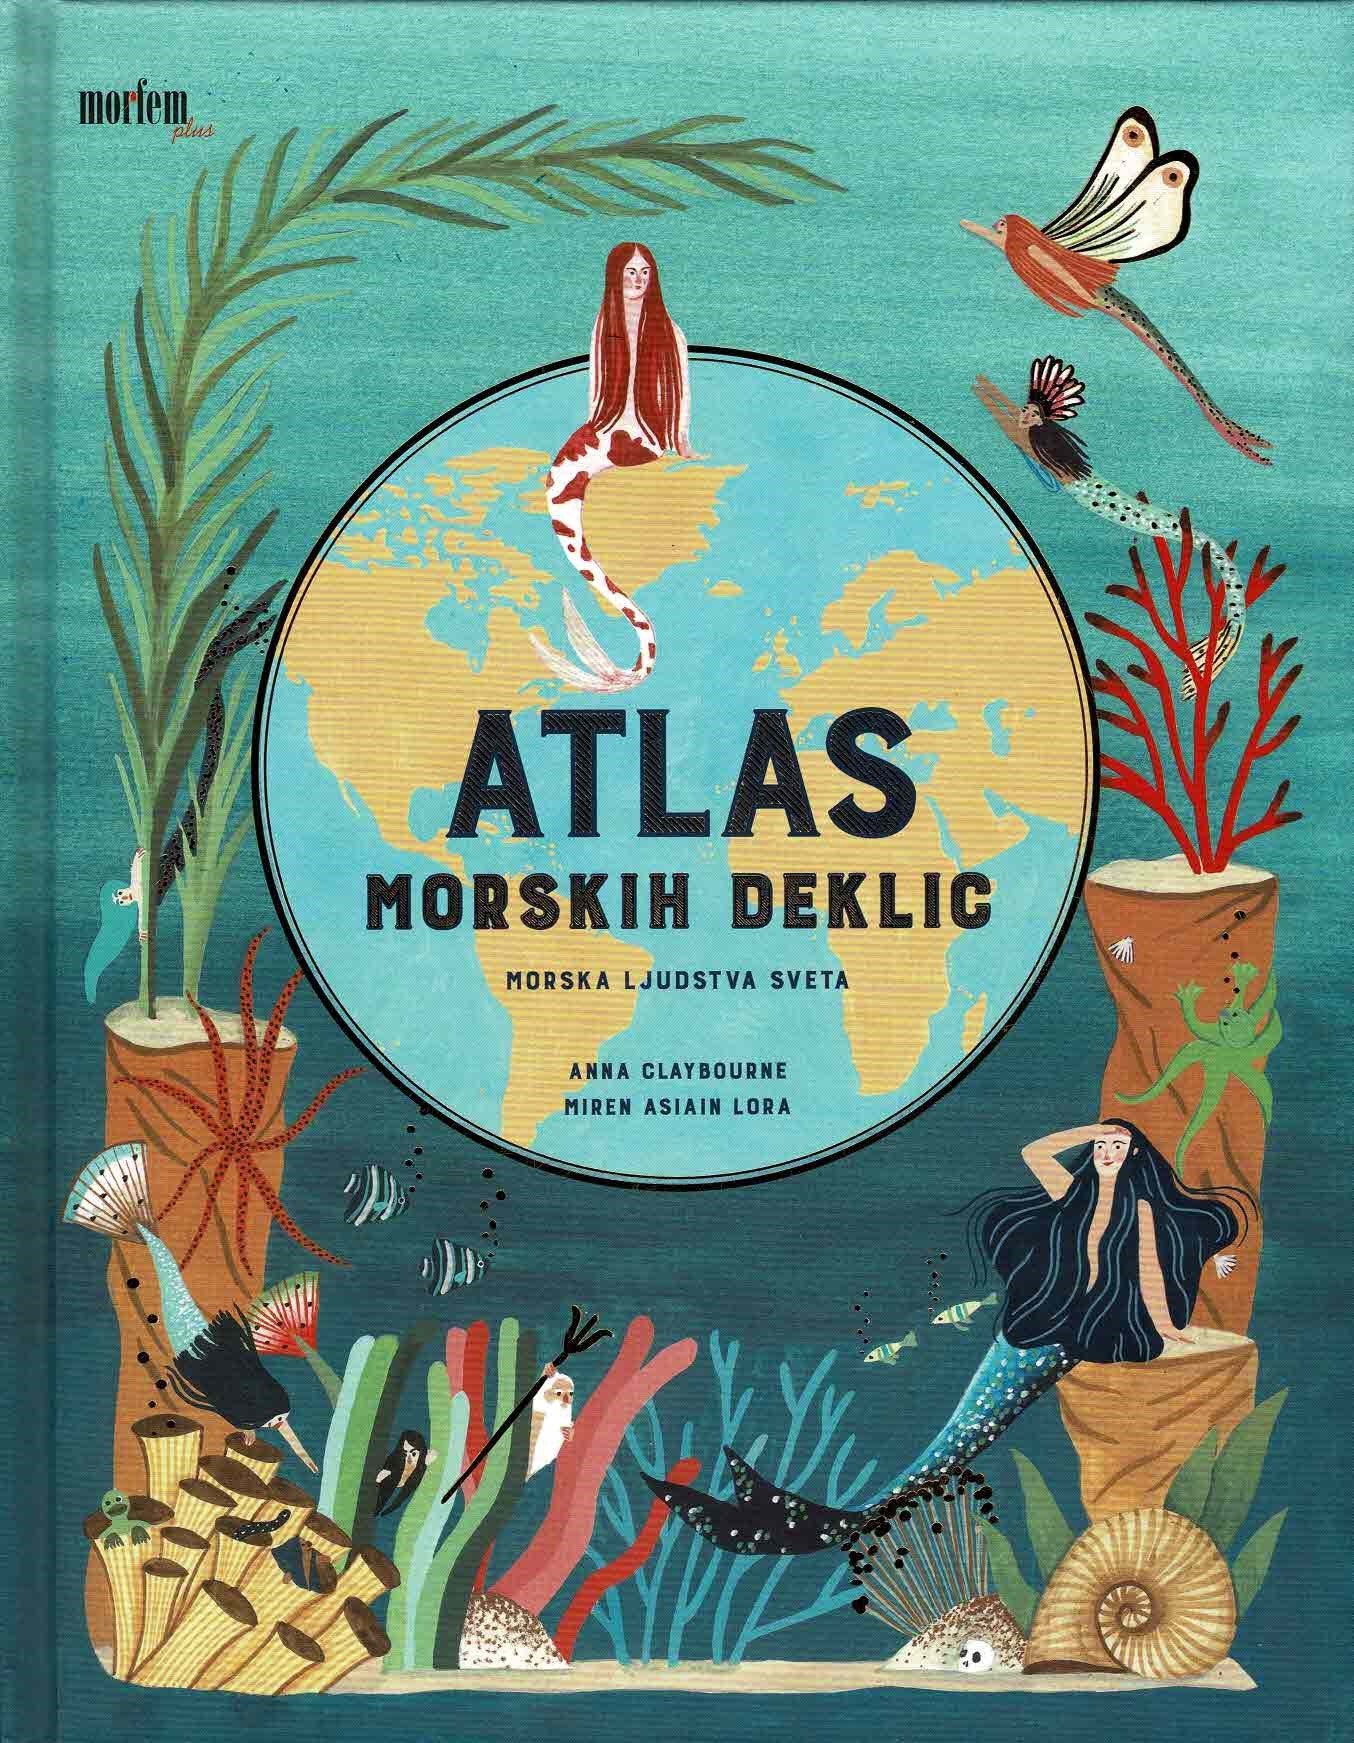 Atlas morskih deklic